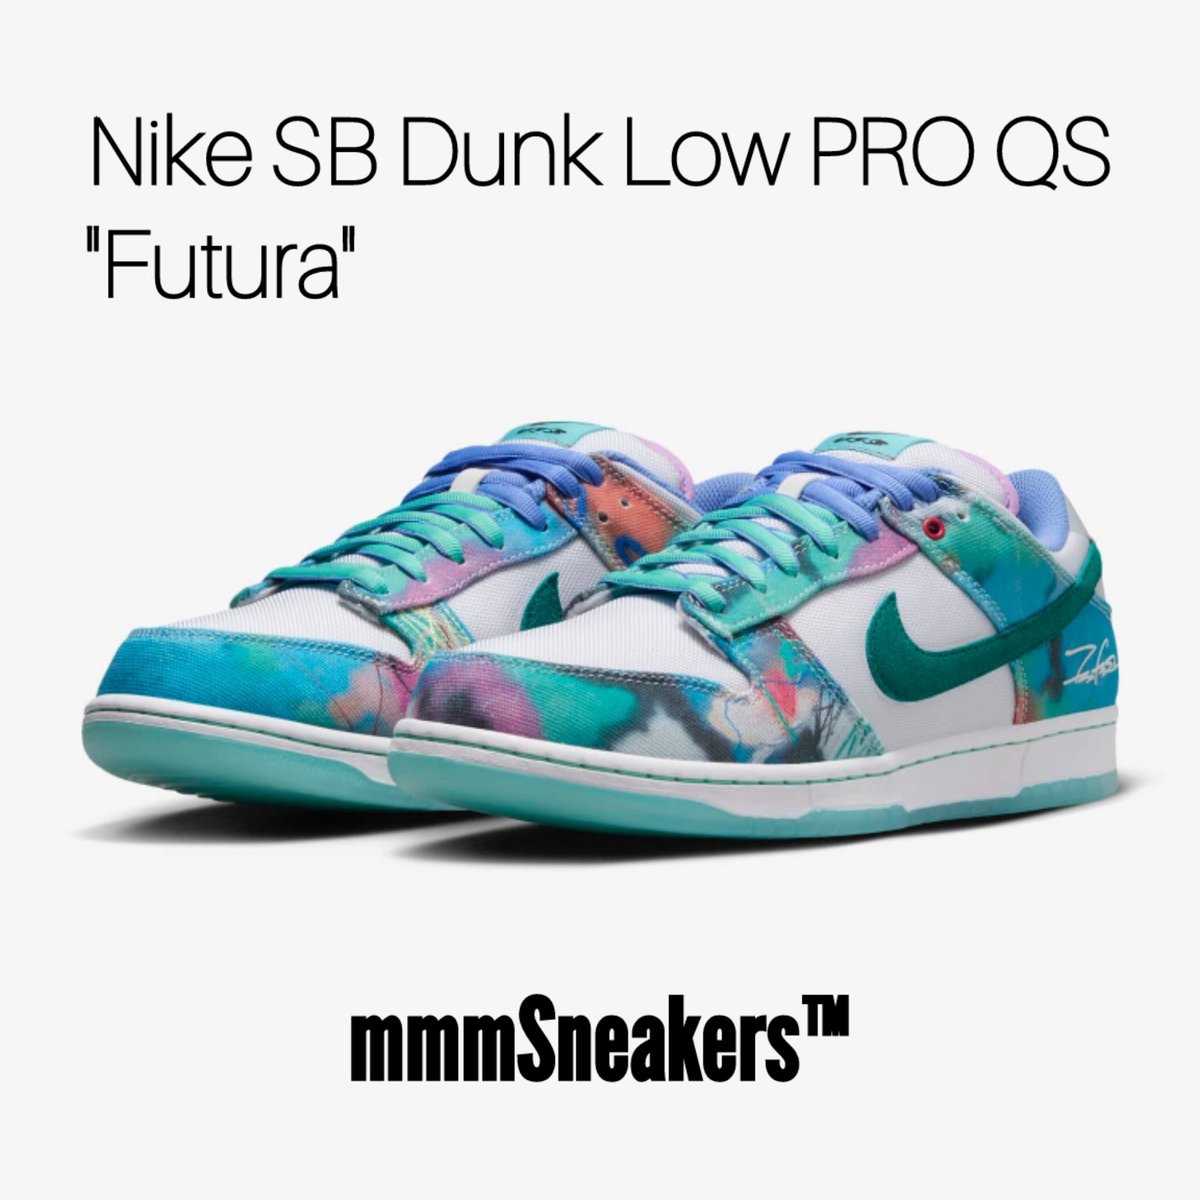 Nike SB Dunk Low PRO QS 'Futura' latitude販売情報 🗓️2024年5月18日10:00-12:00条件付き店頭発売予定 ⚠️購入条件⚠️ ①自分のキックフリップ or ヒールフリップのメイク動画をスタッフへ提示 ②過去2年以内にlatitudeで購入履歴（レシート）がある方 🔗 instagram.com/p/C65xpcgPgvO/…